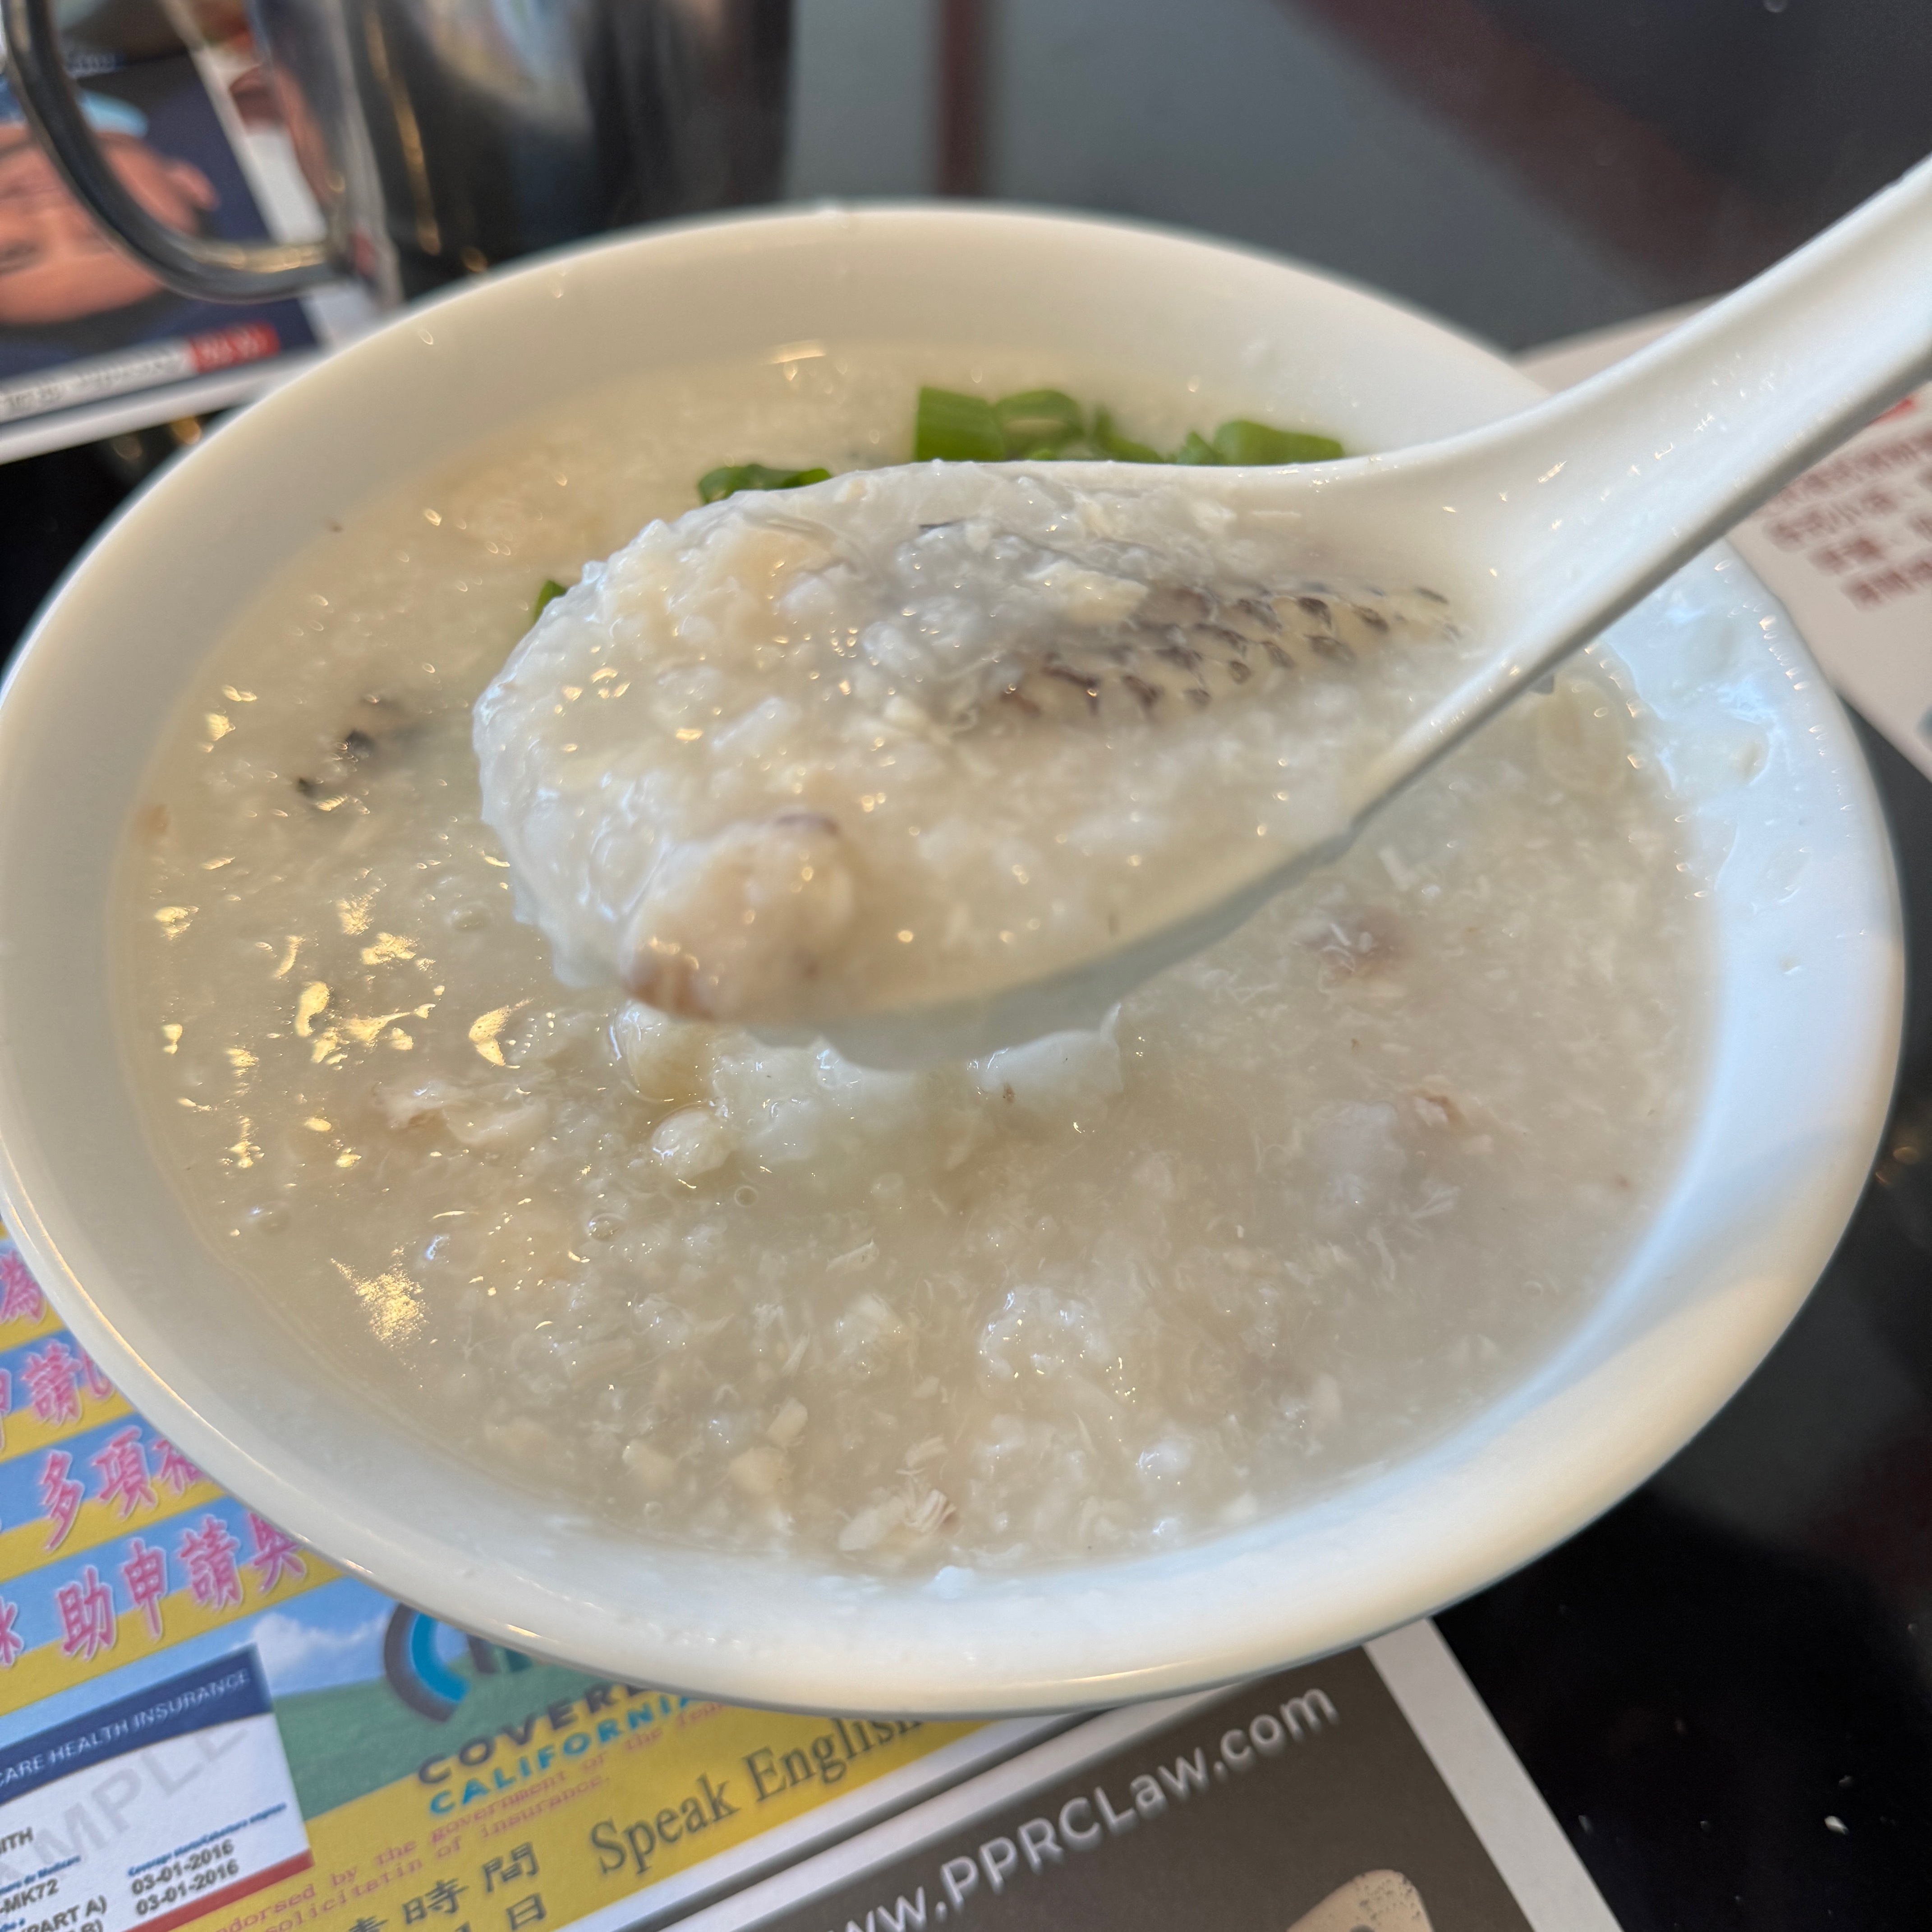 Fresh Fish Porridge with Peanuts at Ho Kee Cafe on #foodmento http://foodmento.com/place/12331